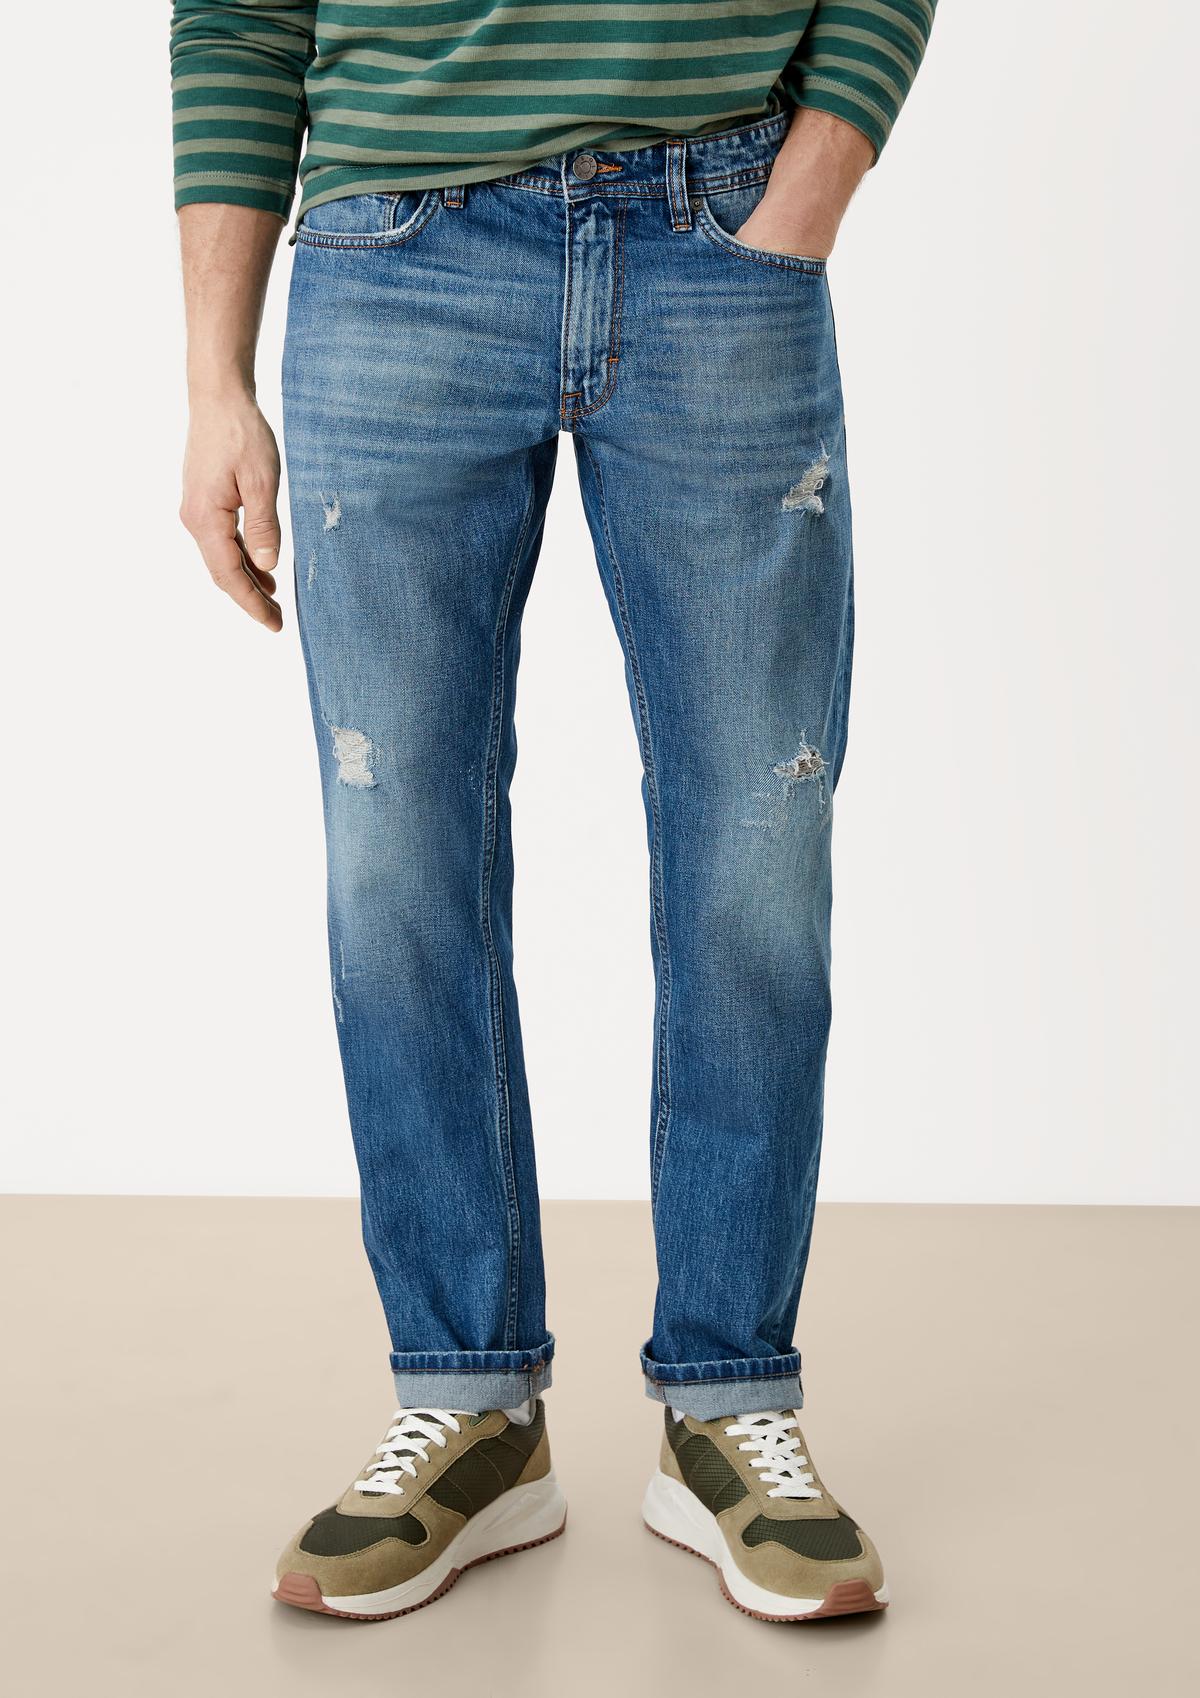 s.Oliver Jeans York / Regular Fit / Mid Rise / Straight Leg 